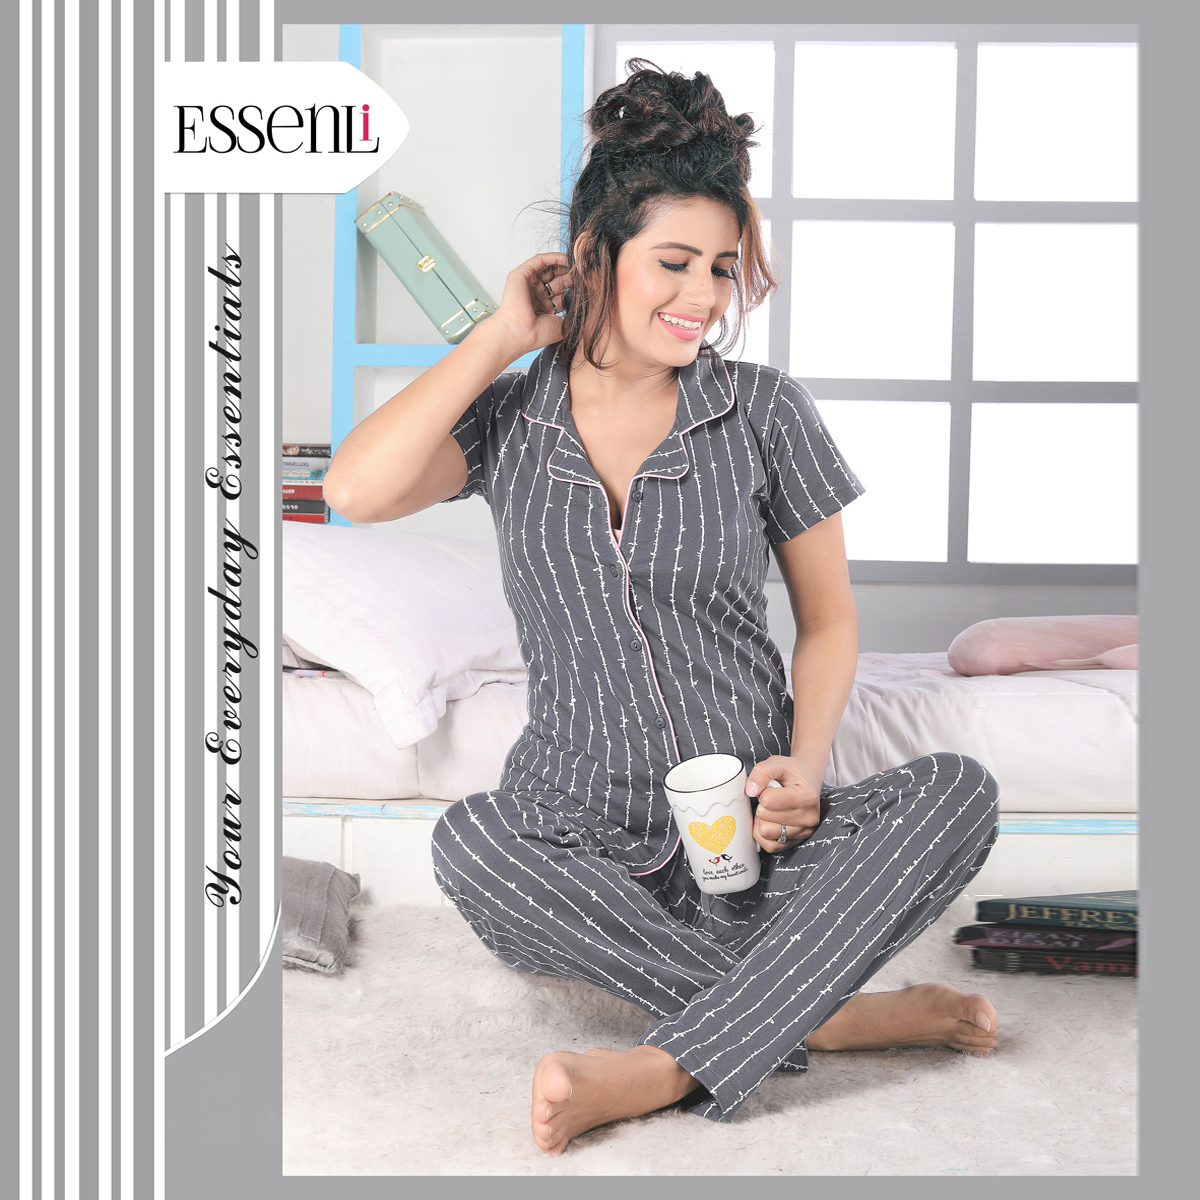 Essenli Cotton Knitted Sleep Wear for Women - Grey